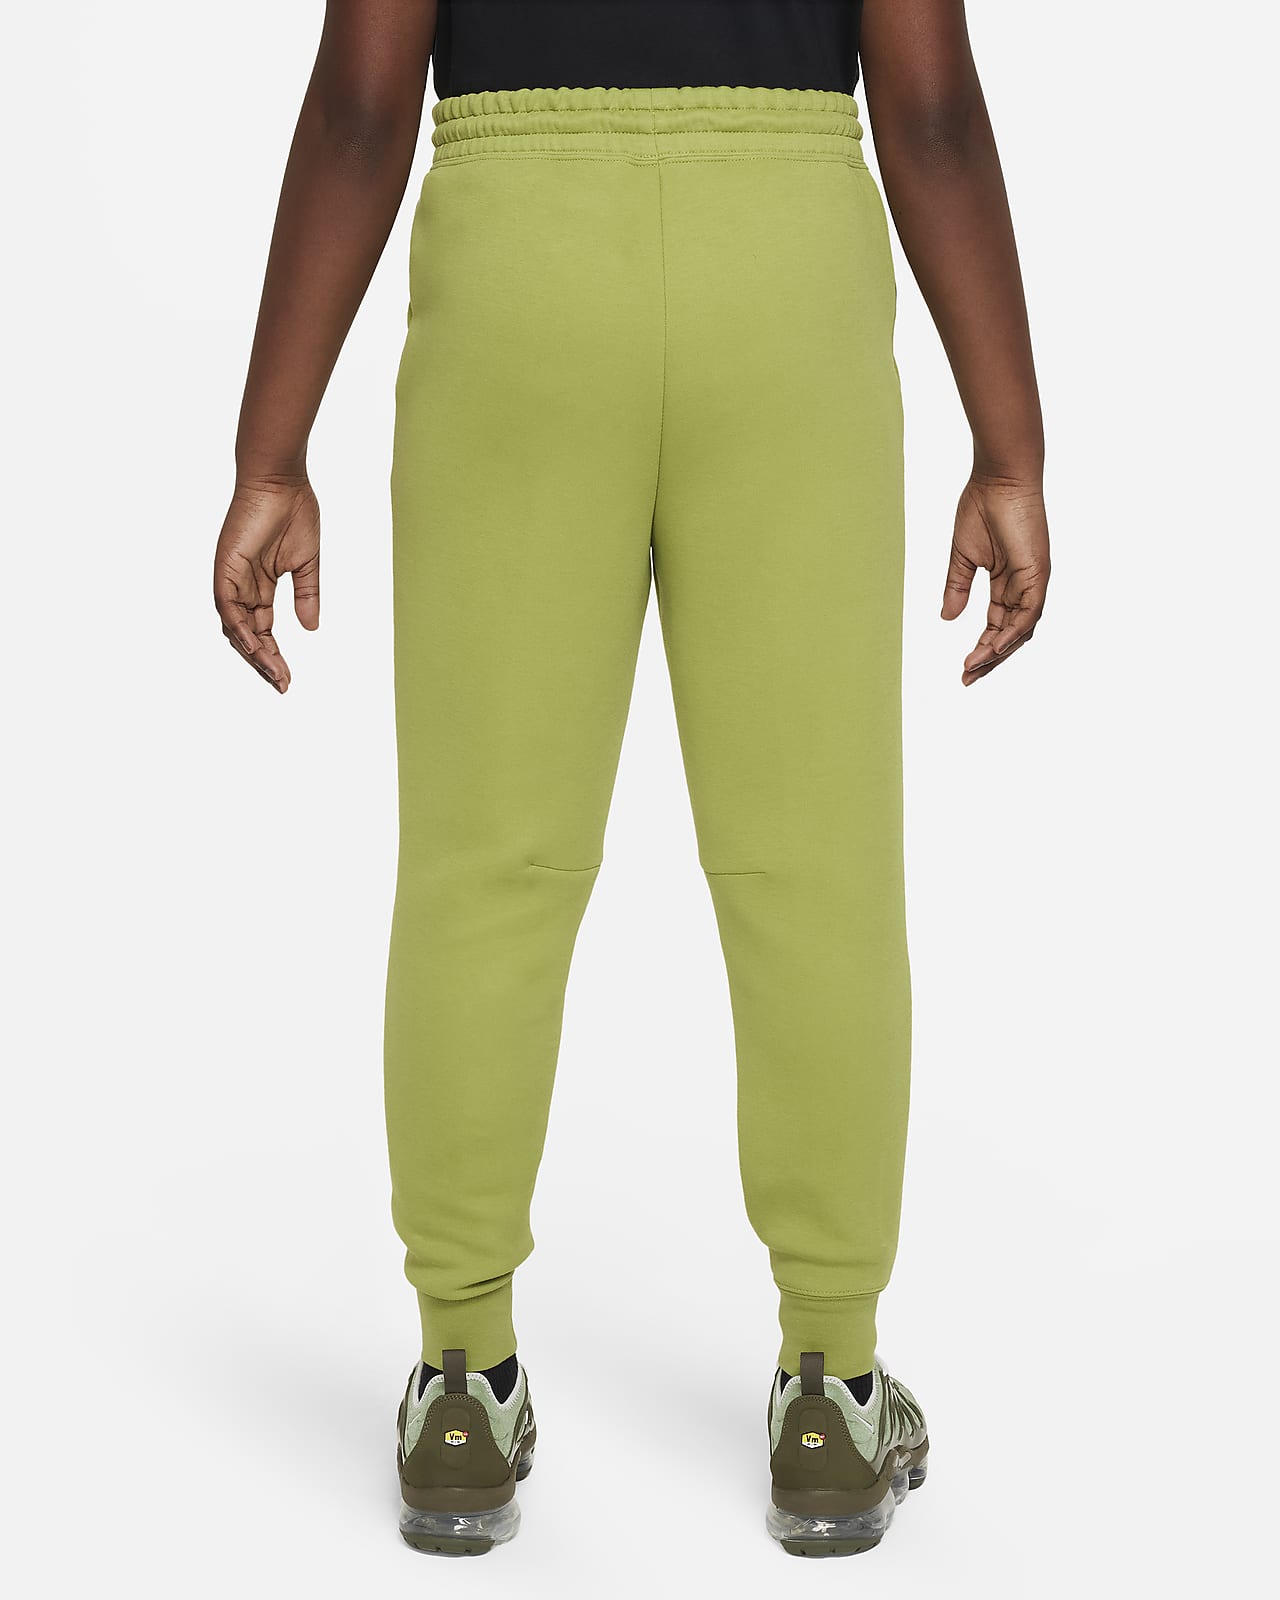 Tek Gear Green Sweatpants Size XXL - 48% off